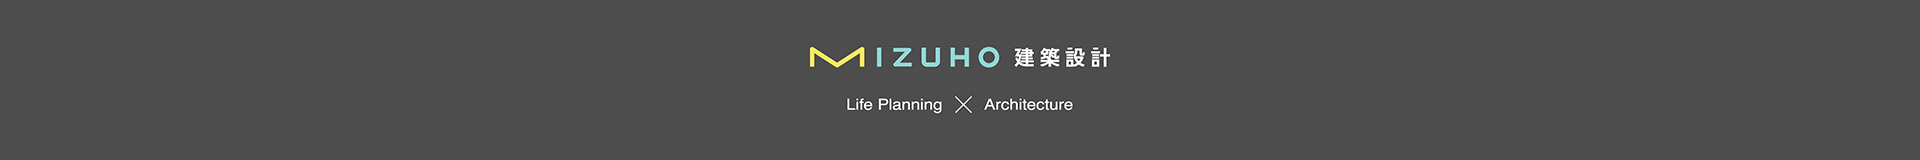 MIZUHO建築設計 Life Planning X Architecture